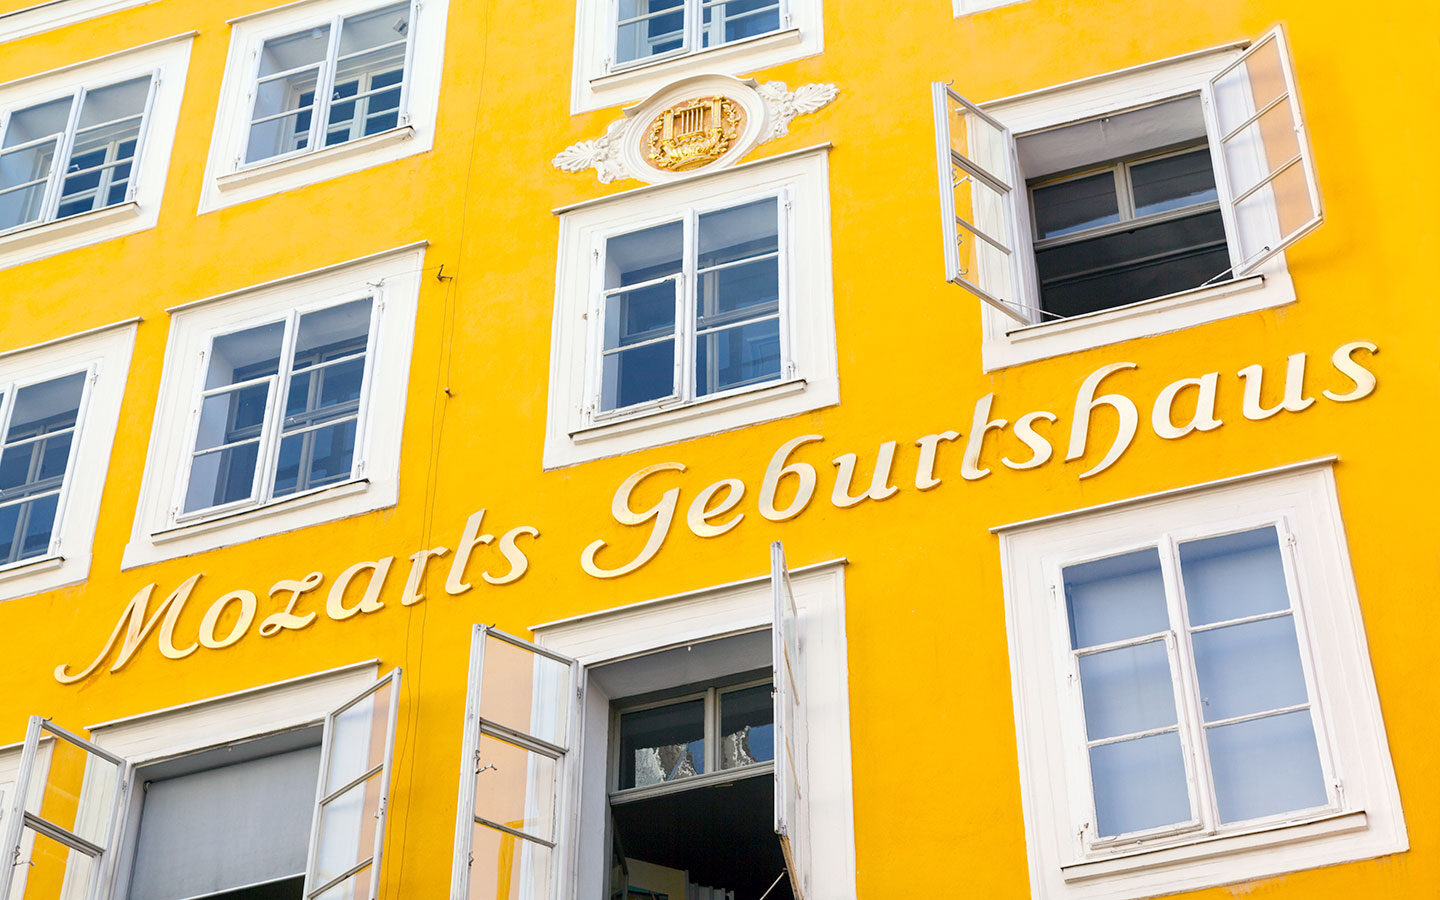 Mozart's Birthplace in Salzburg, Austria